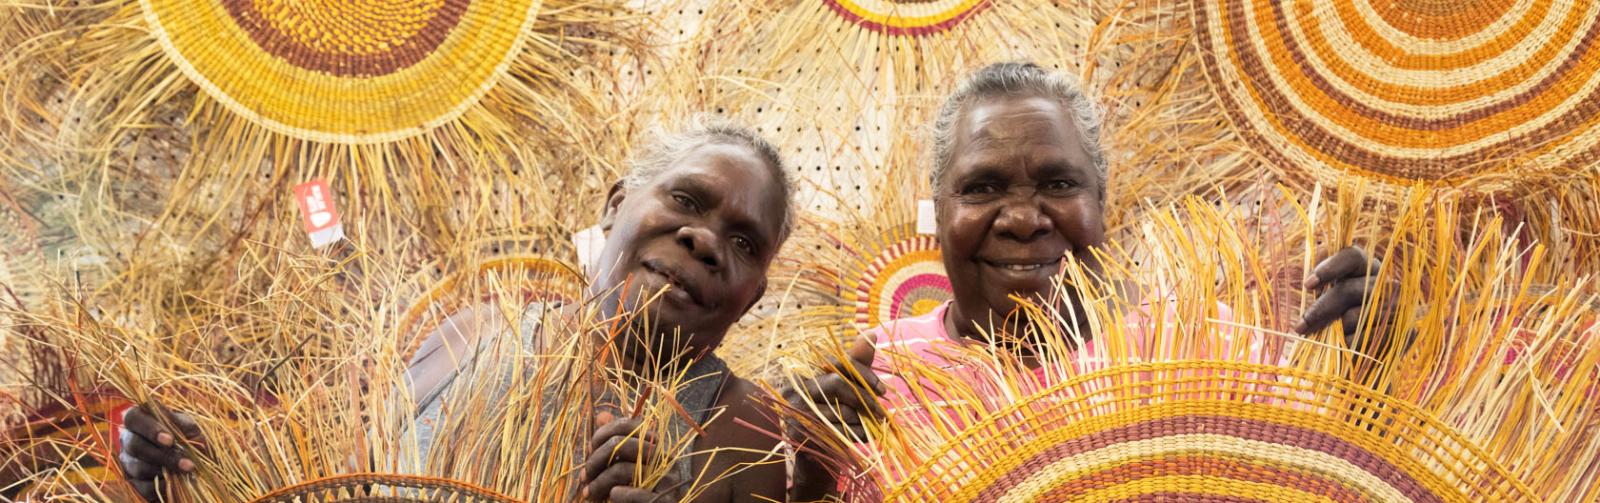 Australian Aboriginal People